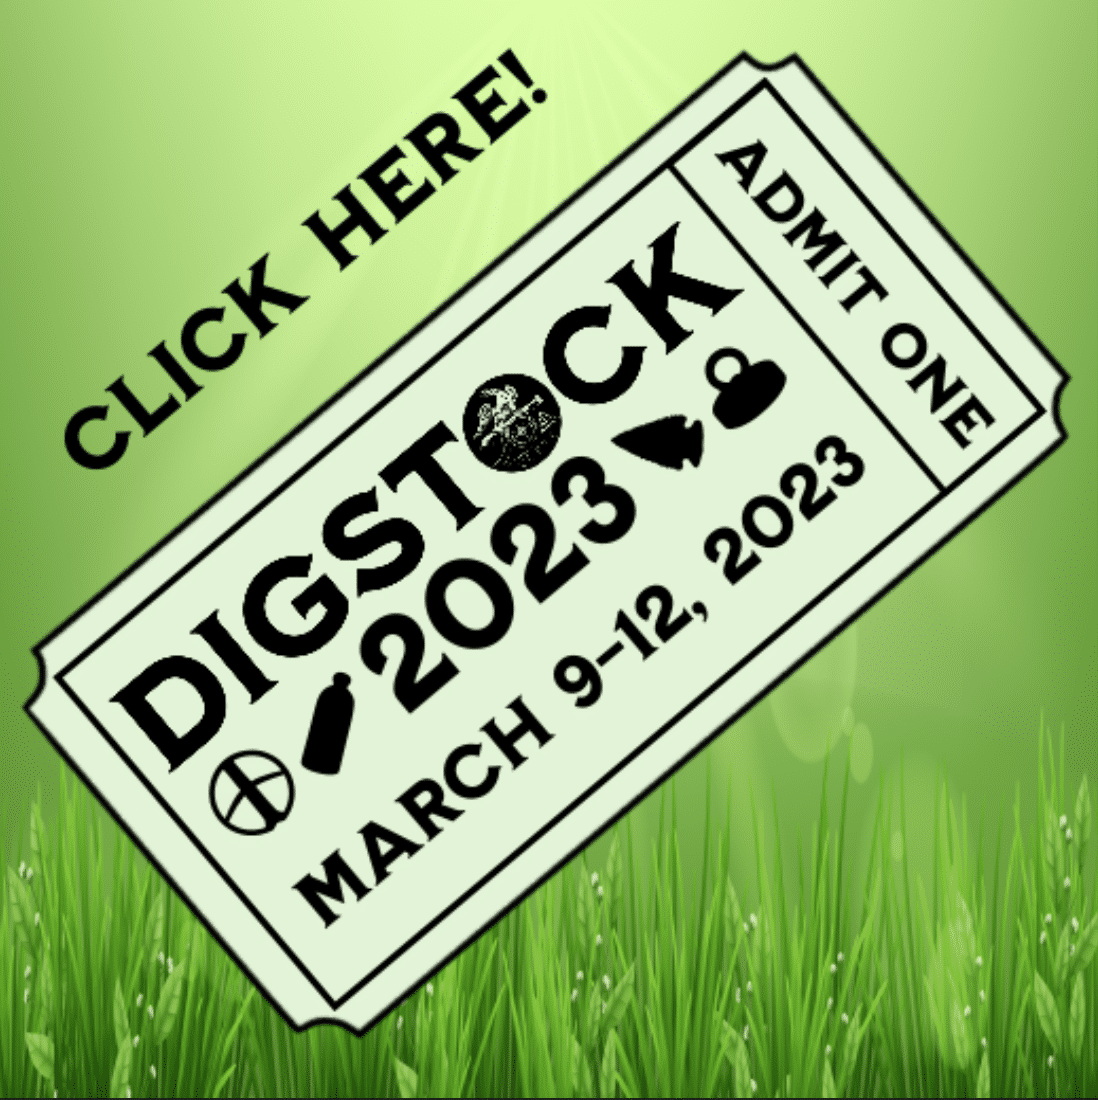 www.digstockevents.com